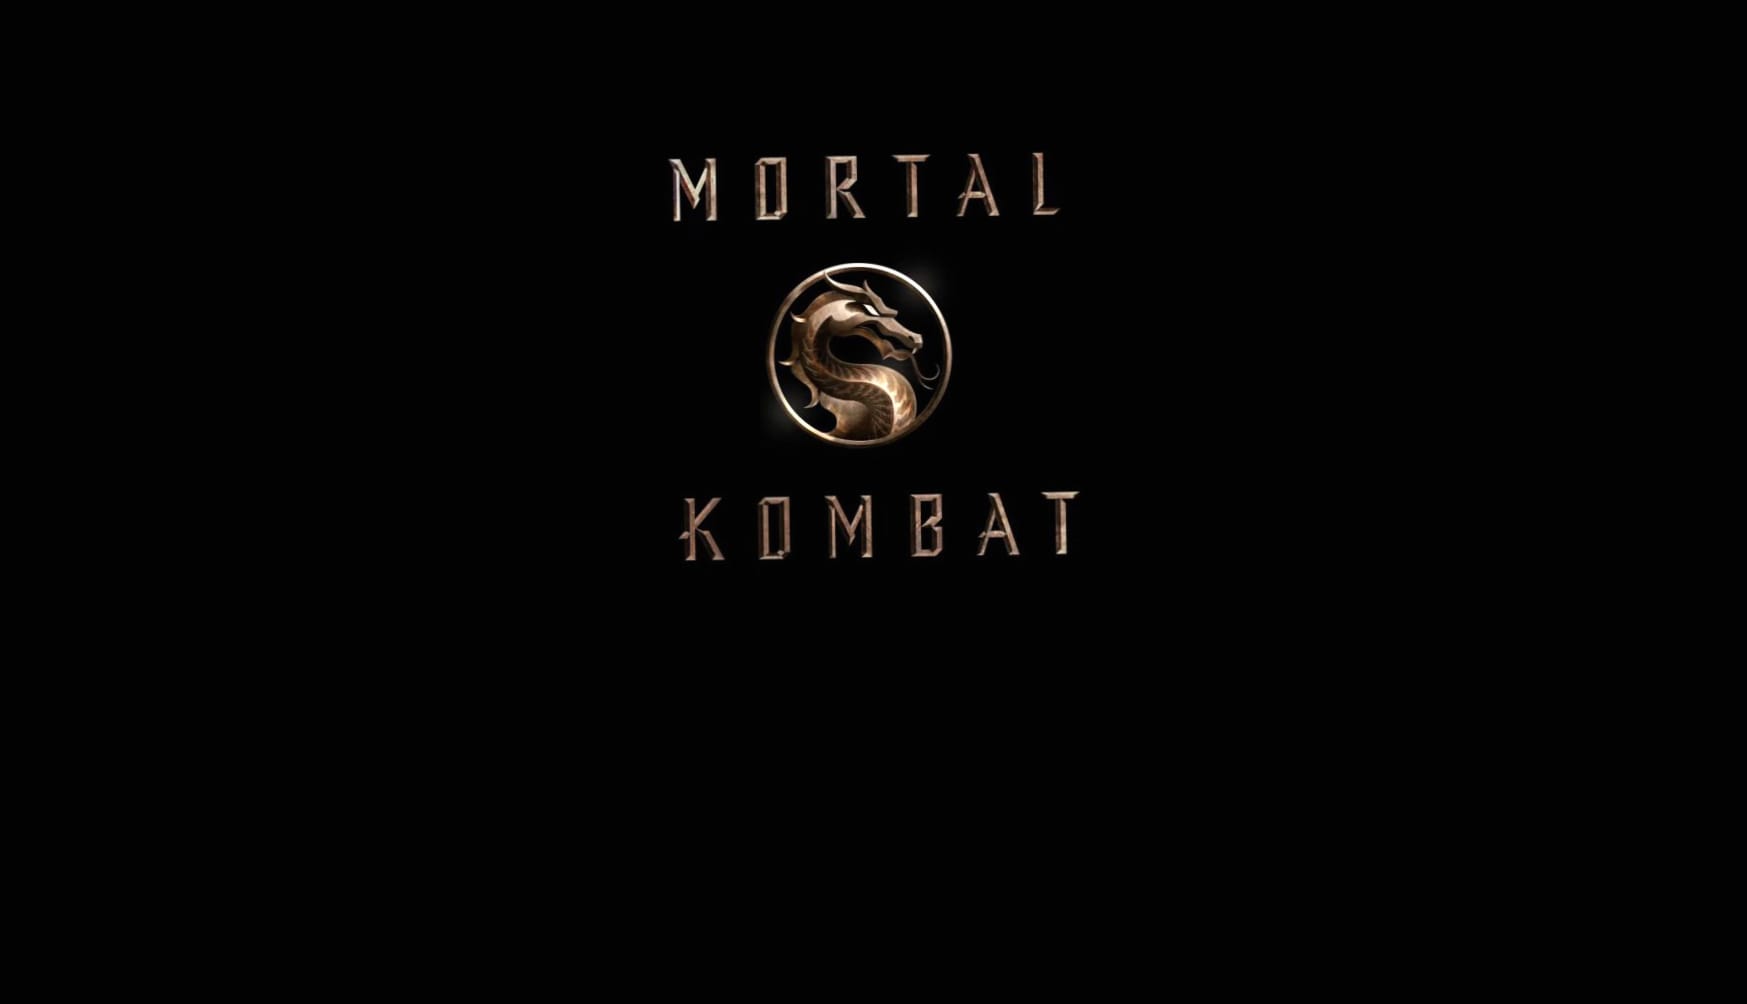 Mortal Kombat (2021) at 1600 x 1200 size wallpapers HD quality